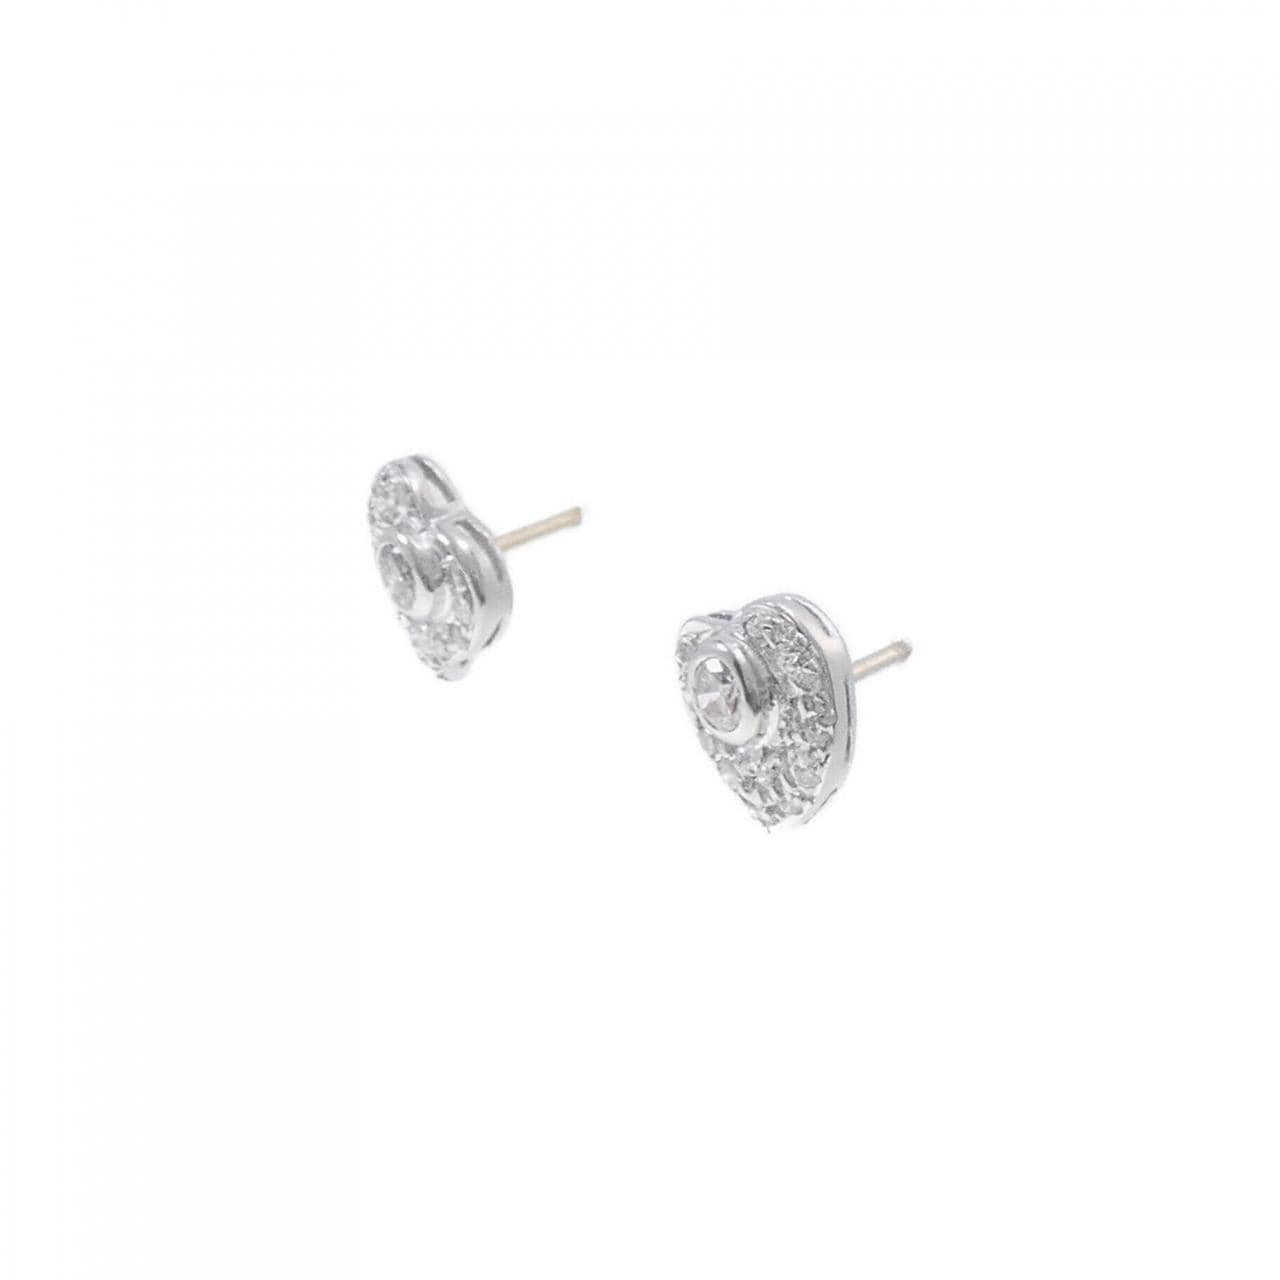 PT heart Pink diamond earrings 0.20CT